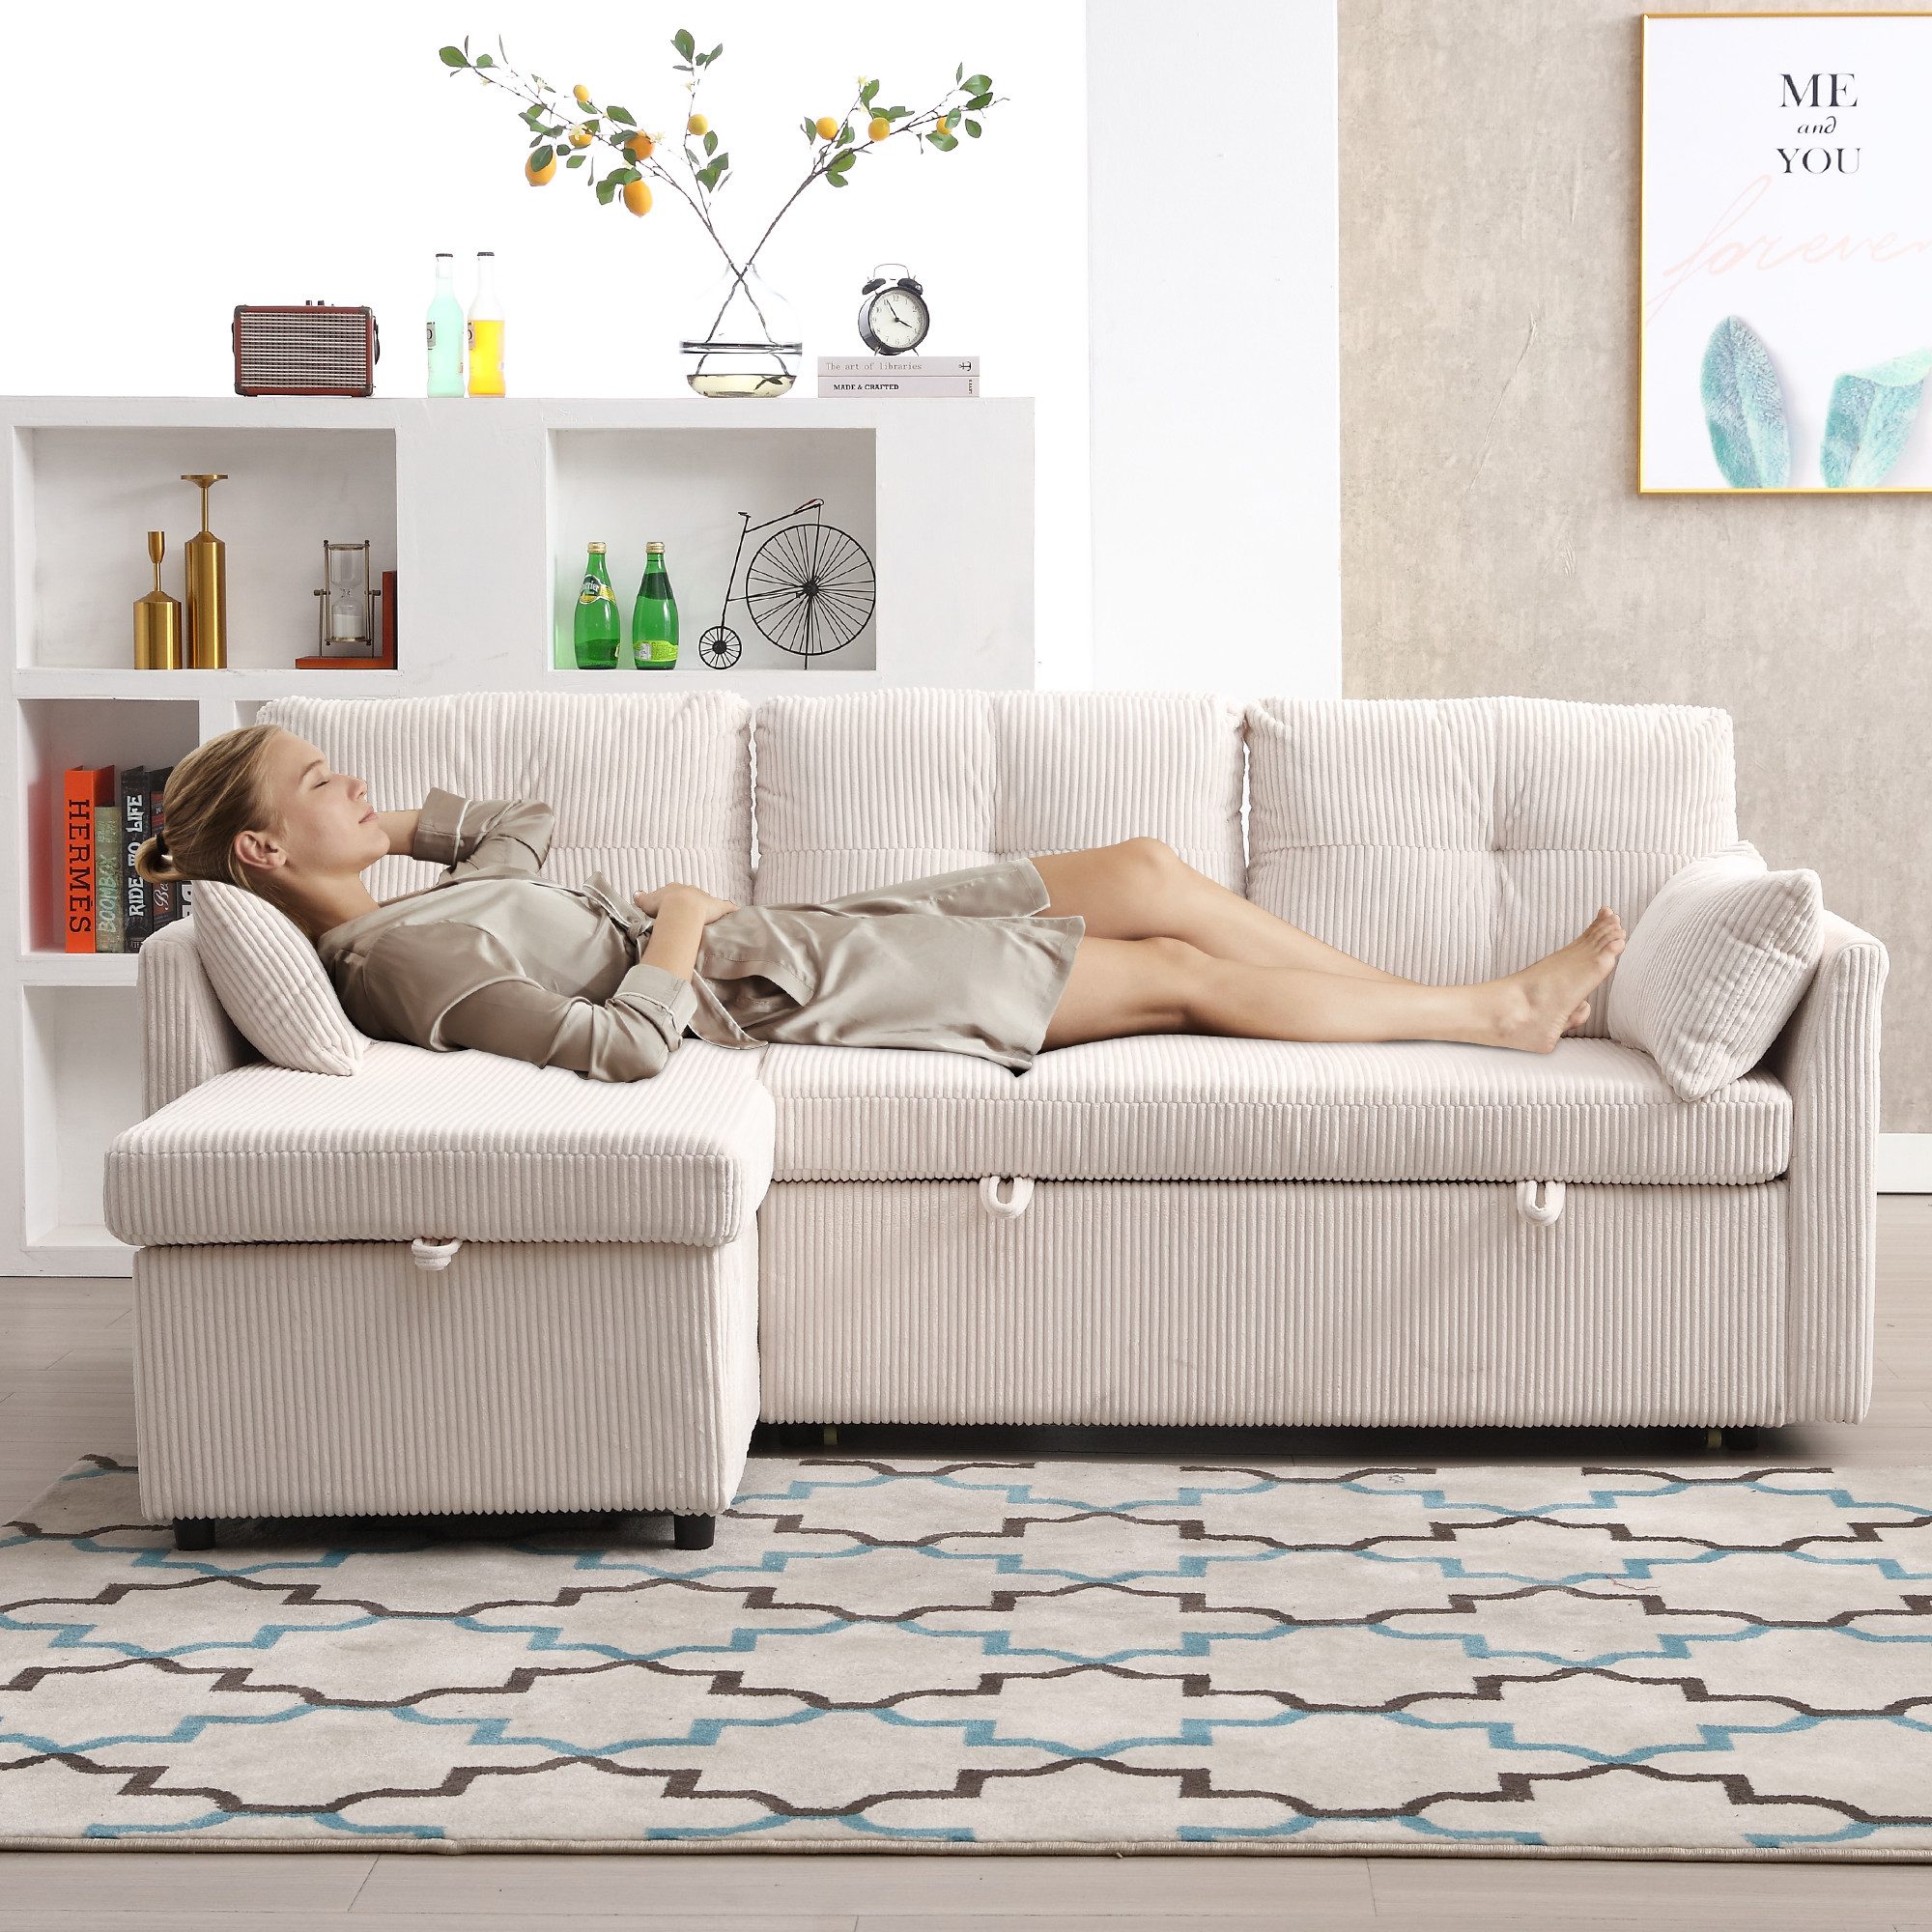 Odikalo Chaiselongue L-Form modulare Couch Loungesofa umkehrbar Stauraumsitzen Mehrfarbig